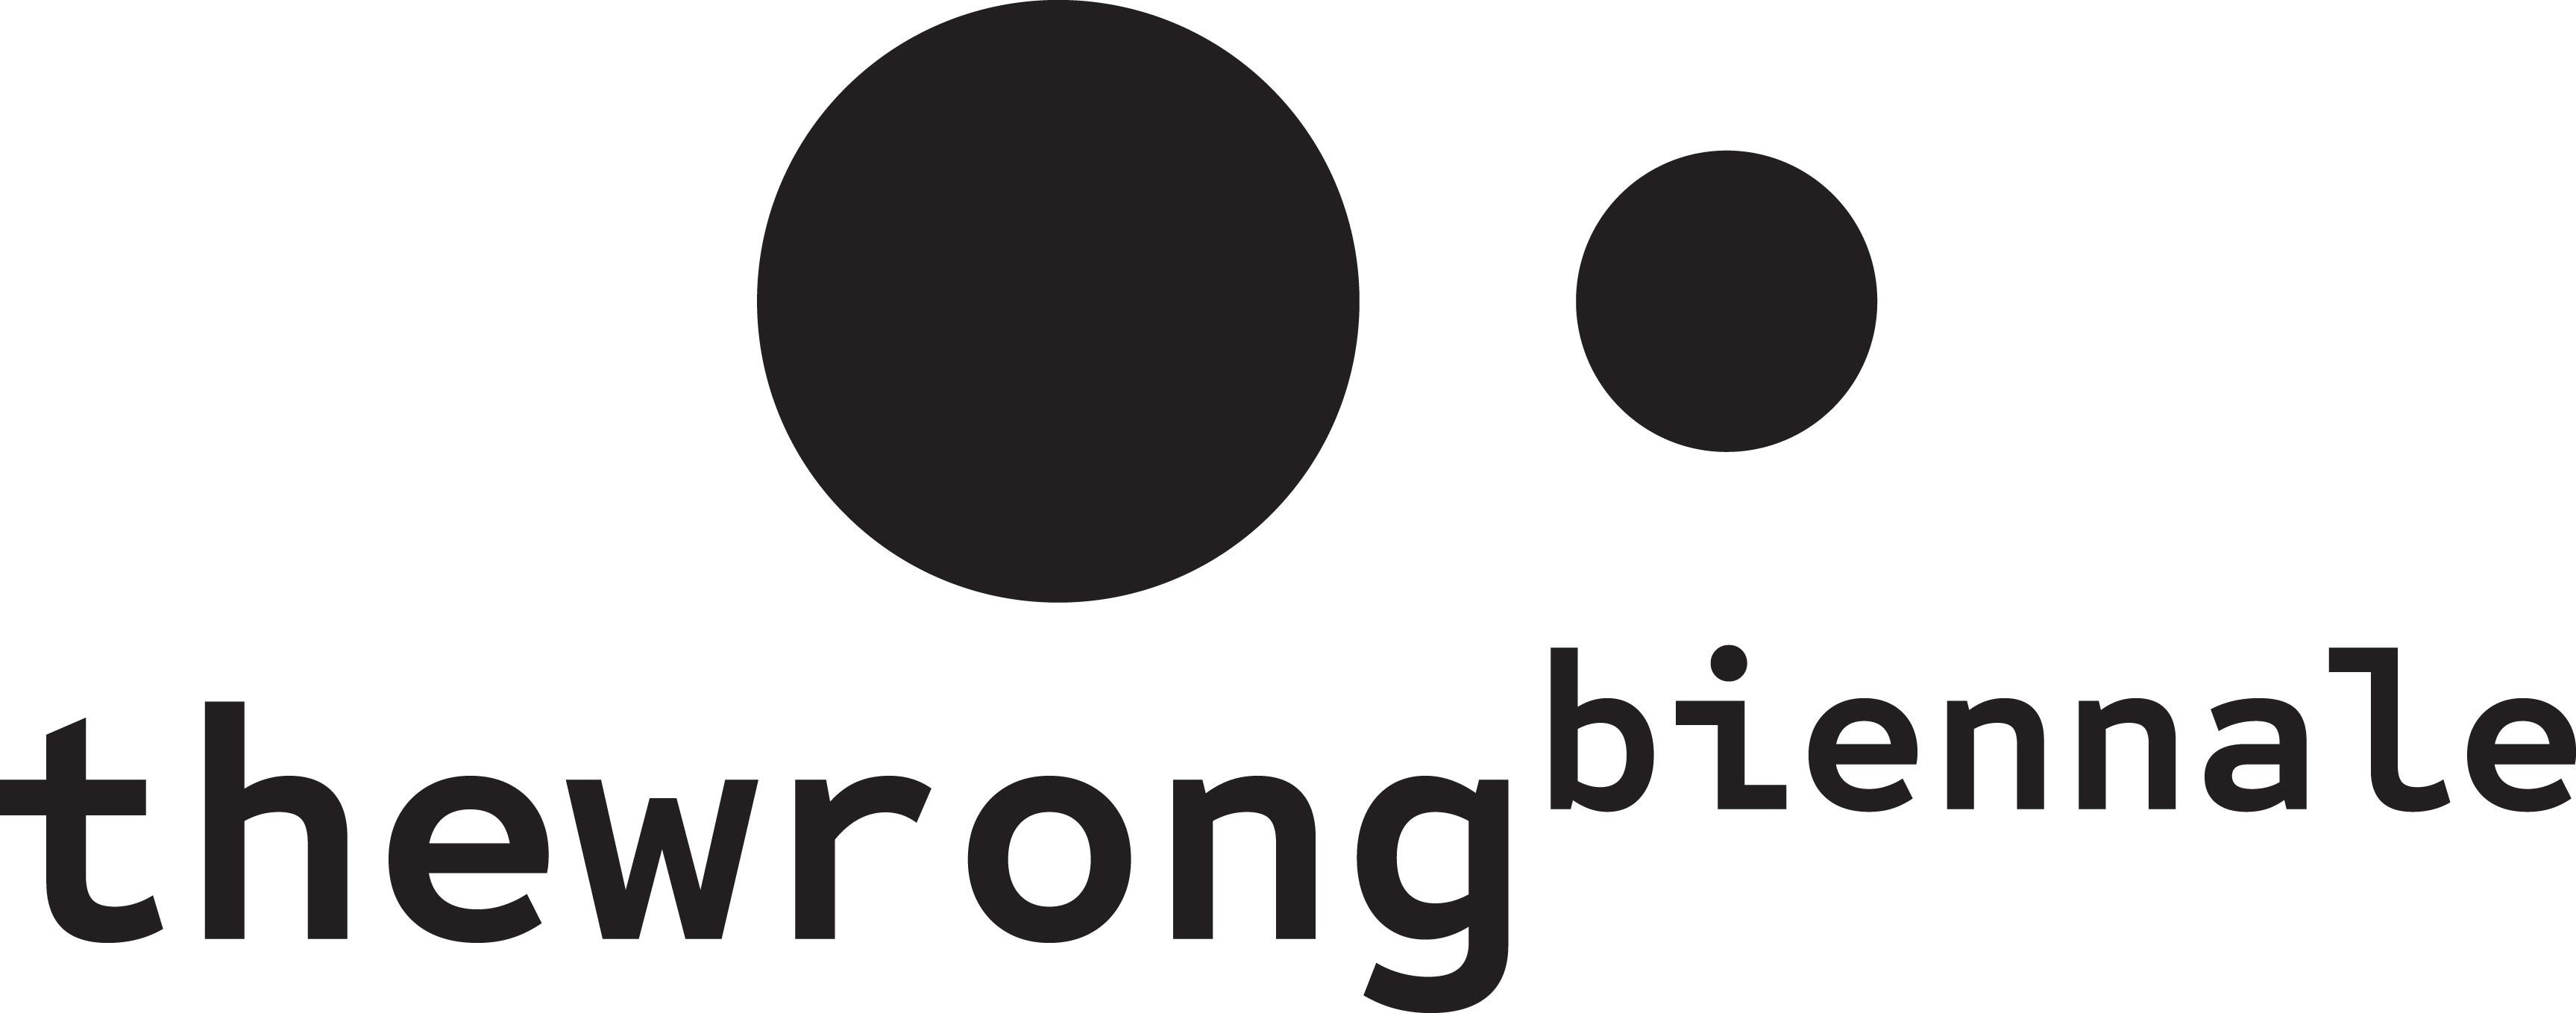 The Wrong Biennale logo